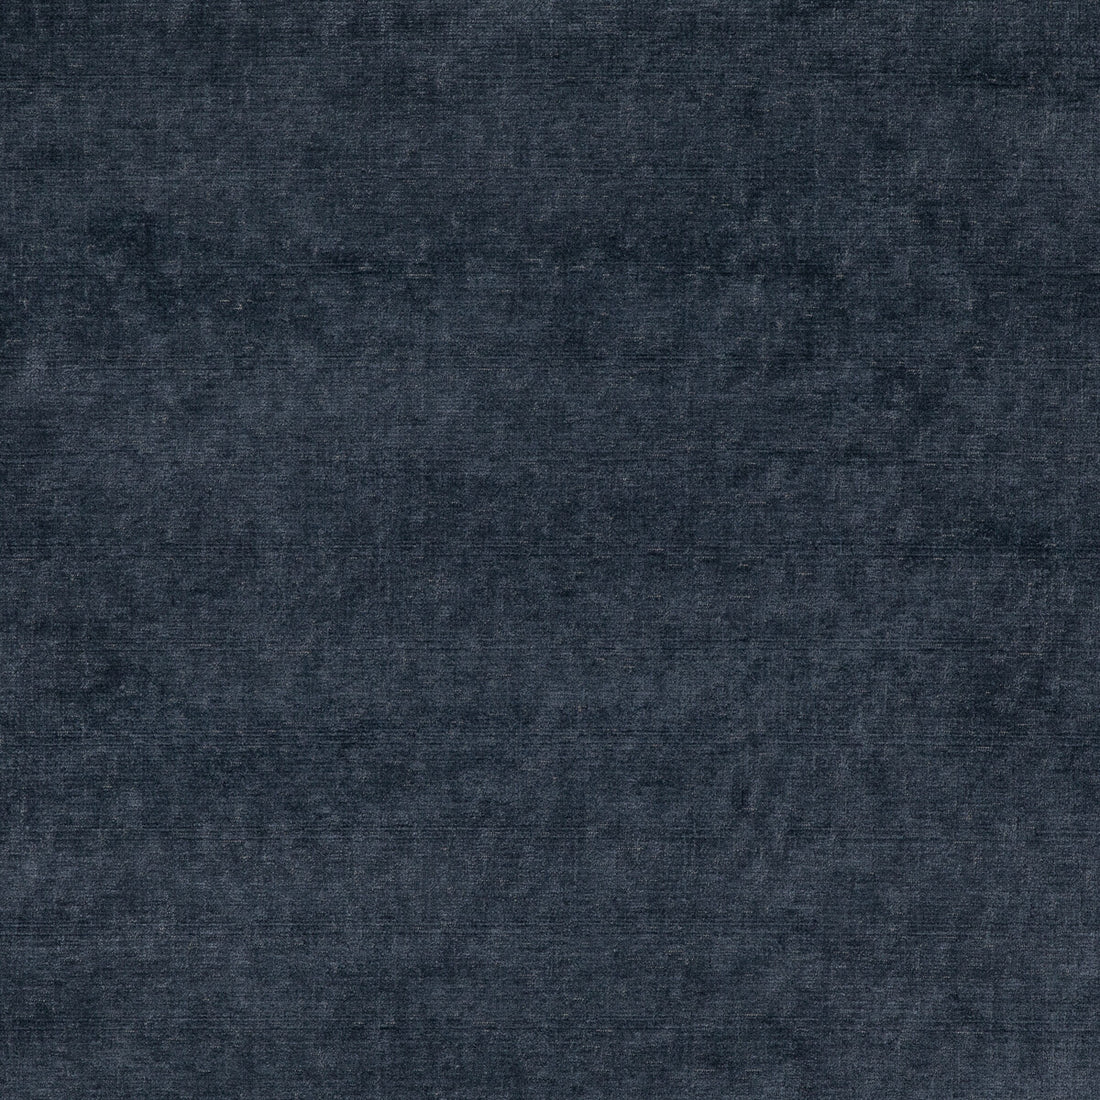 Alma Velvet fabric in indigo color - pattern BF10827.680.0 - by G P &amp; J Baker in the Coromandel Velvets collection